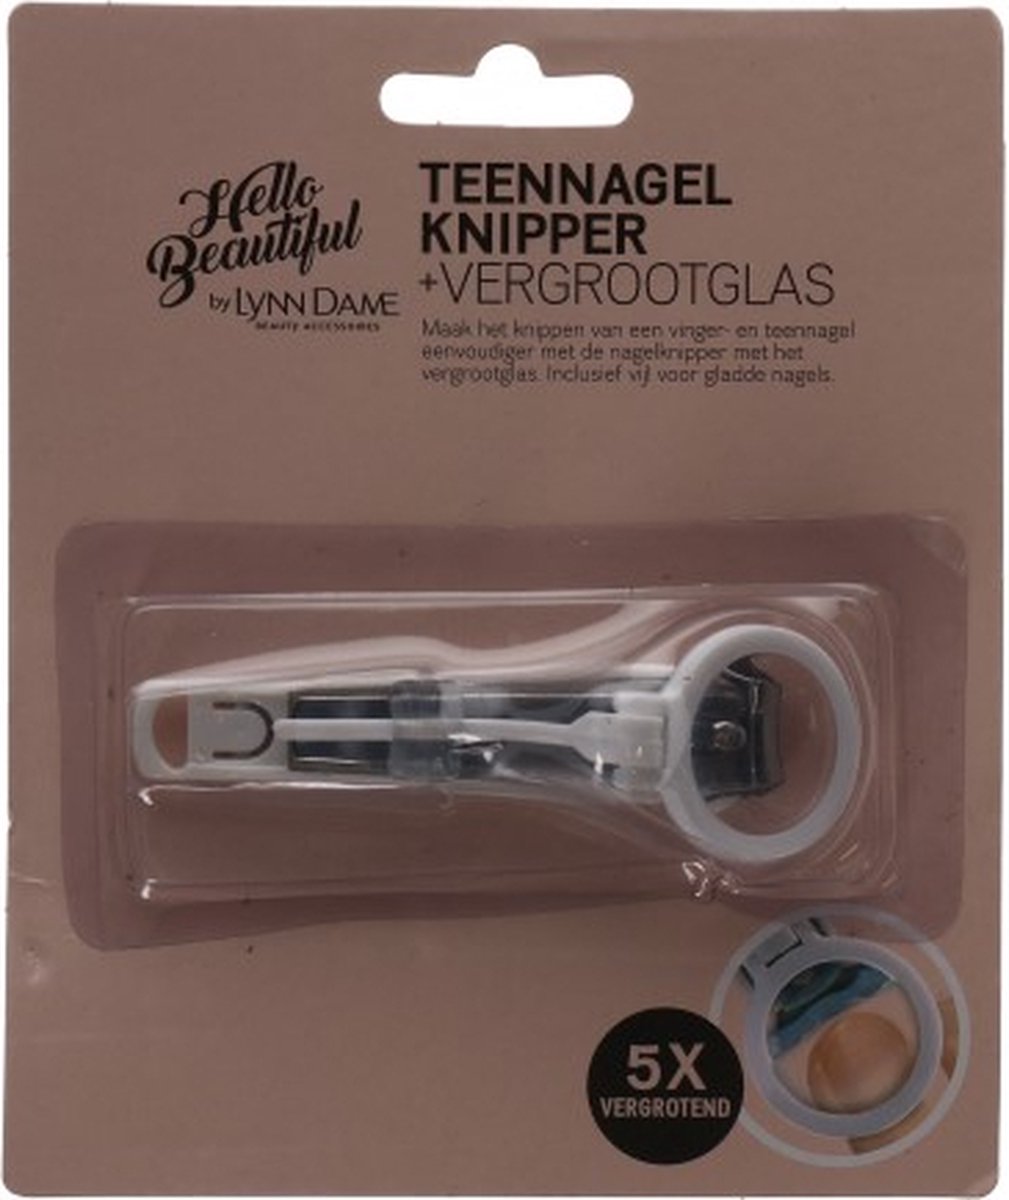 Hello beautiful | Teennagel knipper met vergrootglas | Nagelknipper | 5 x vergrotend | Met nagelvijl | Nagels knippen